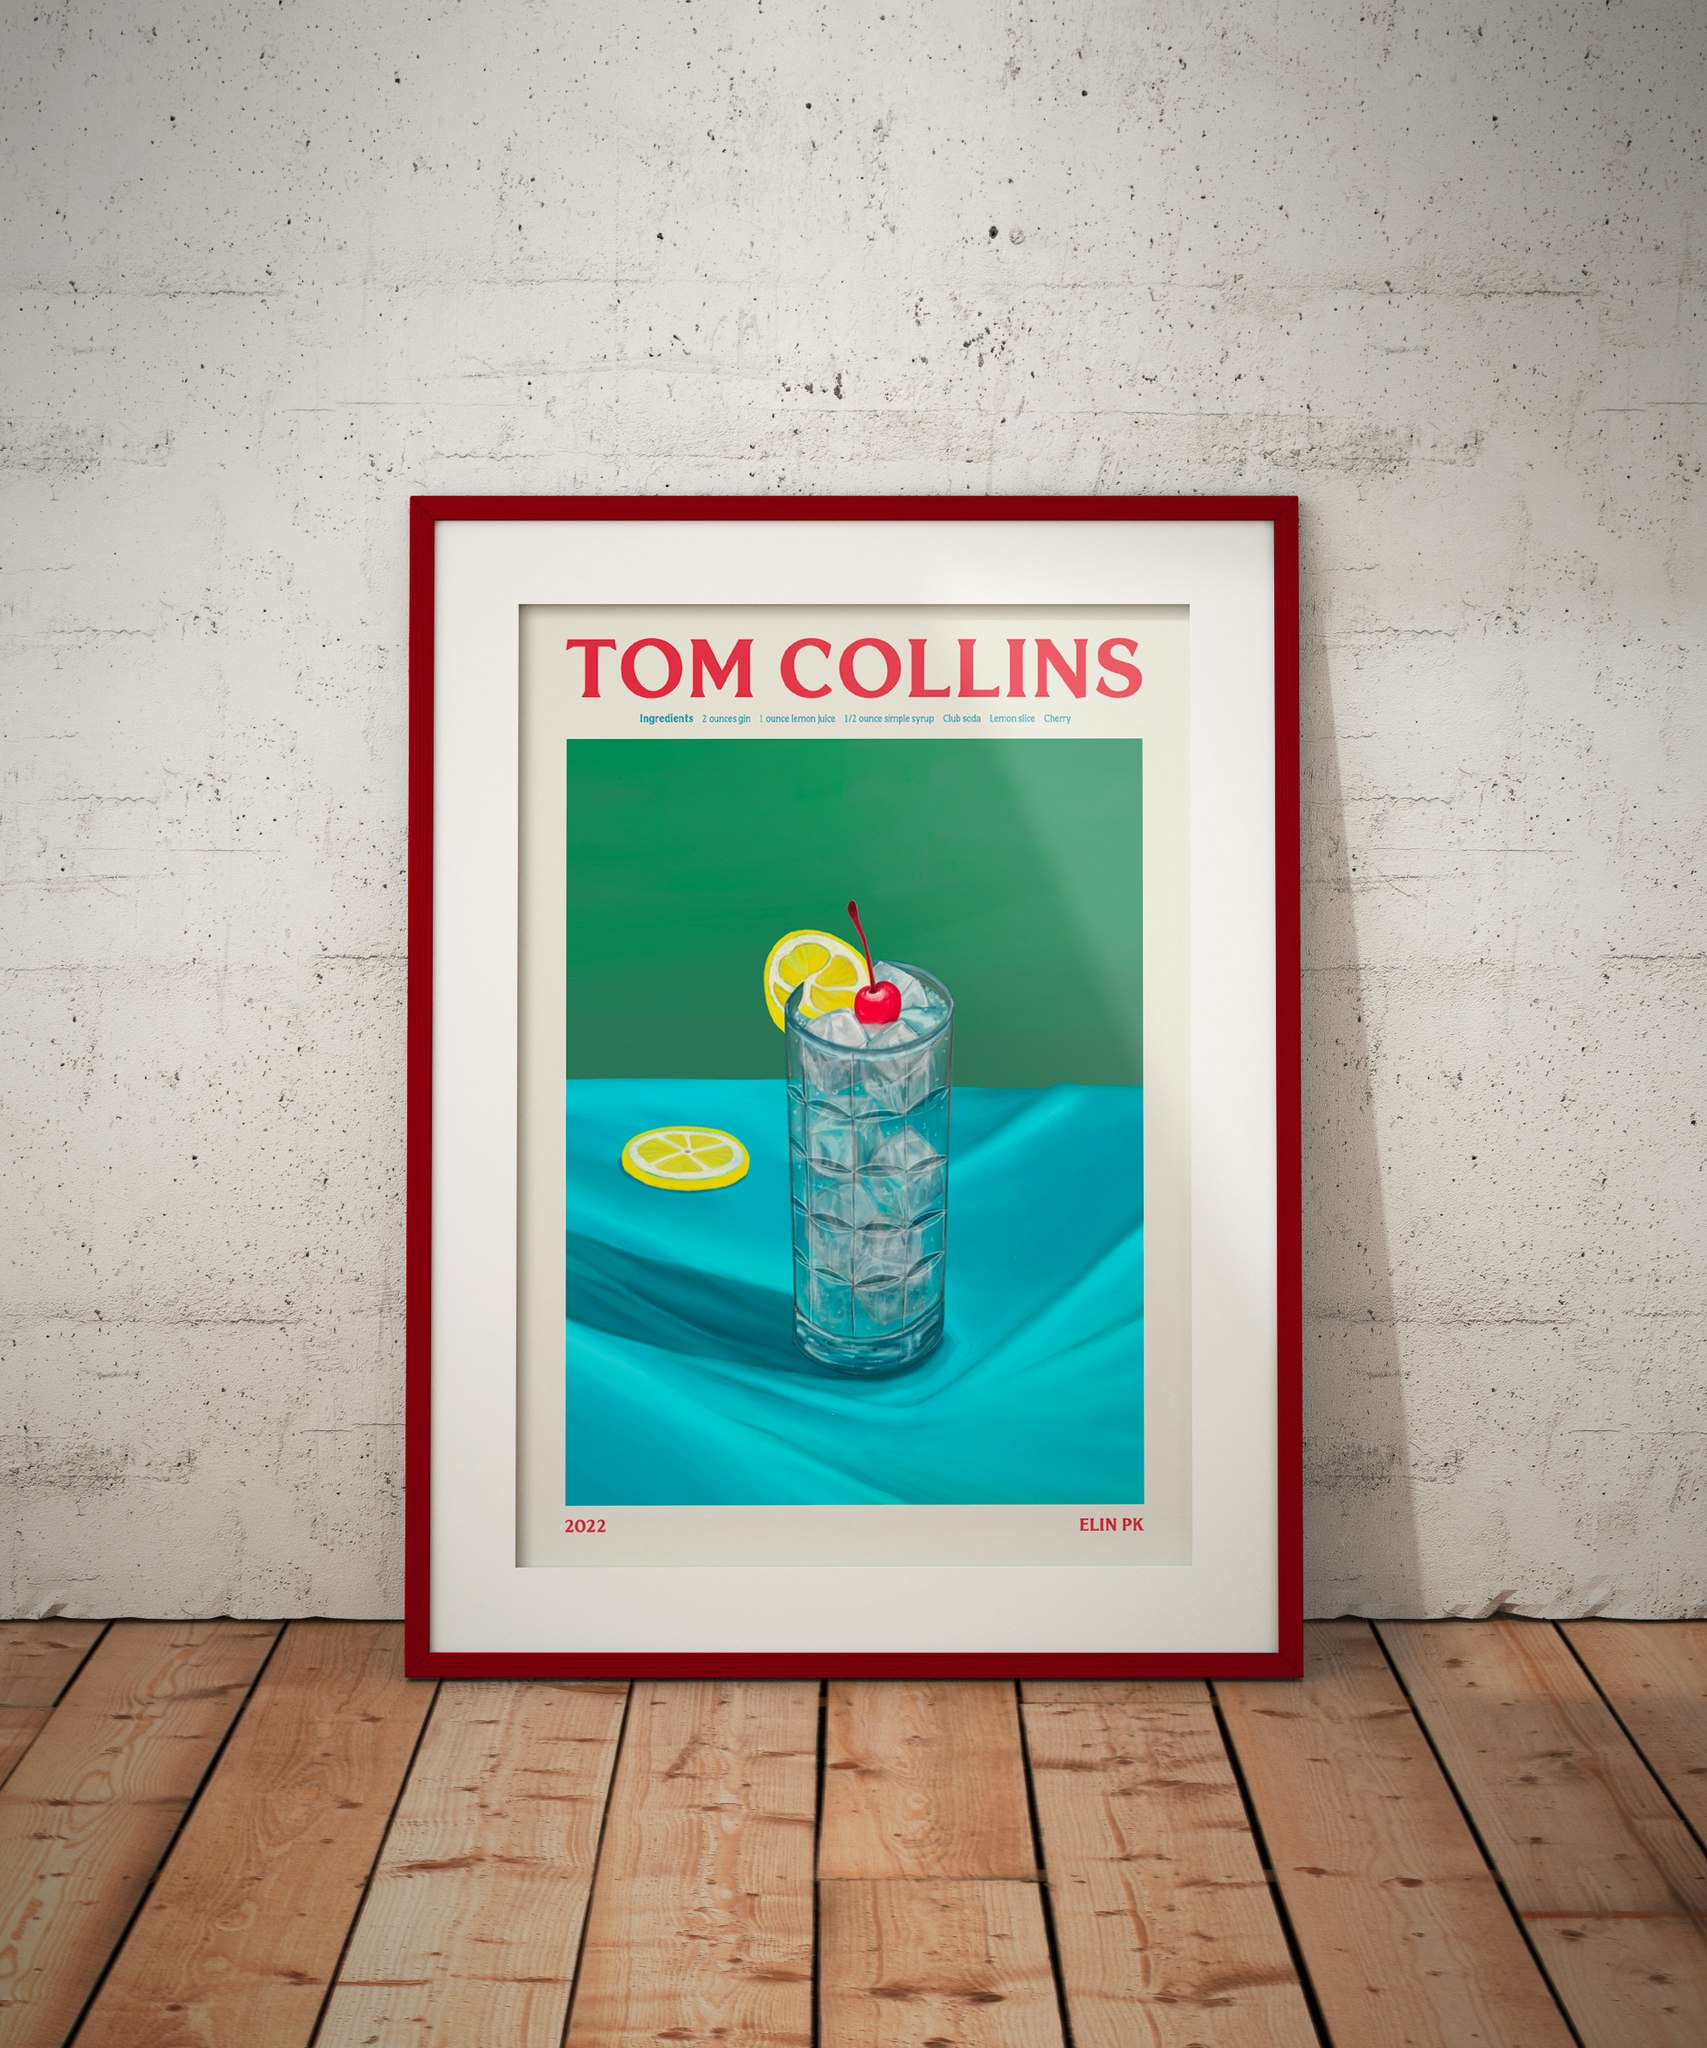 "Tom Collins"